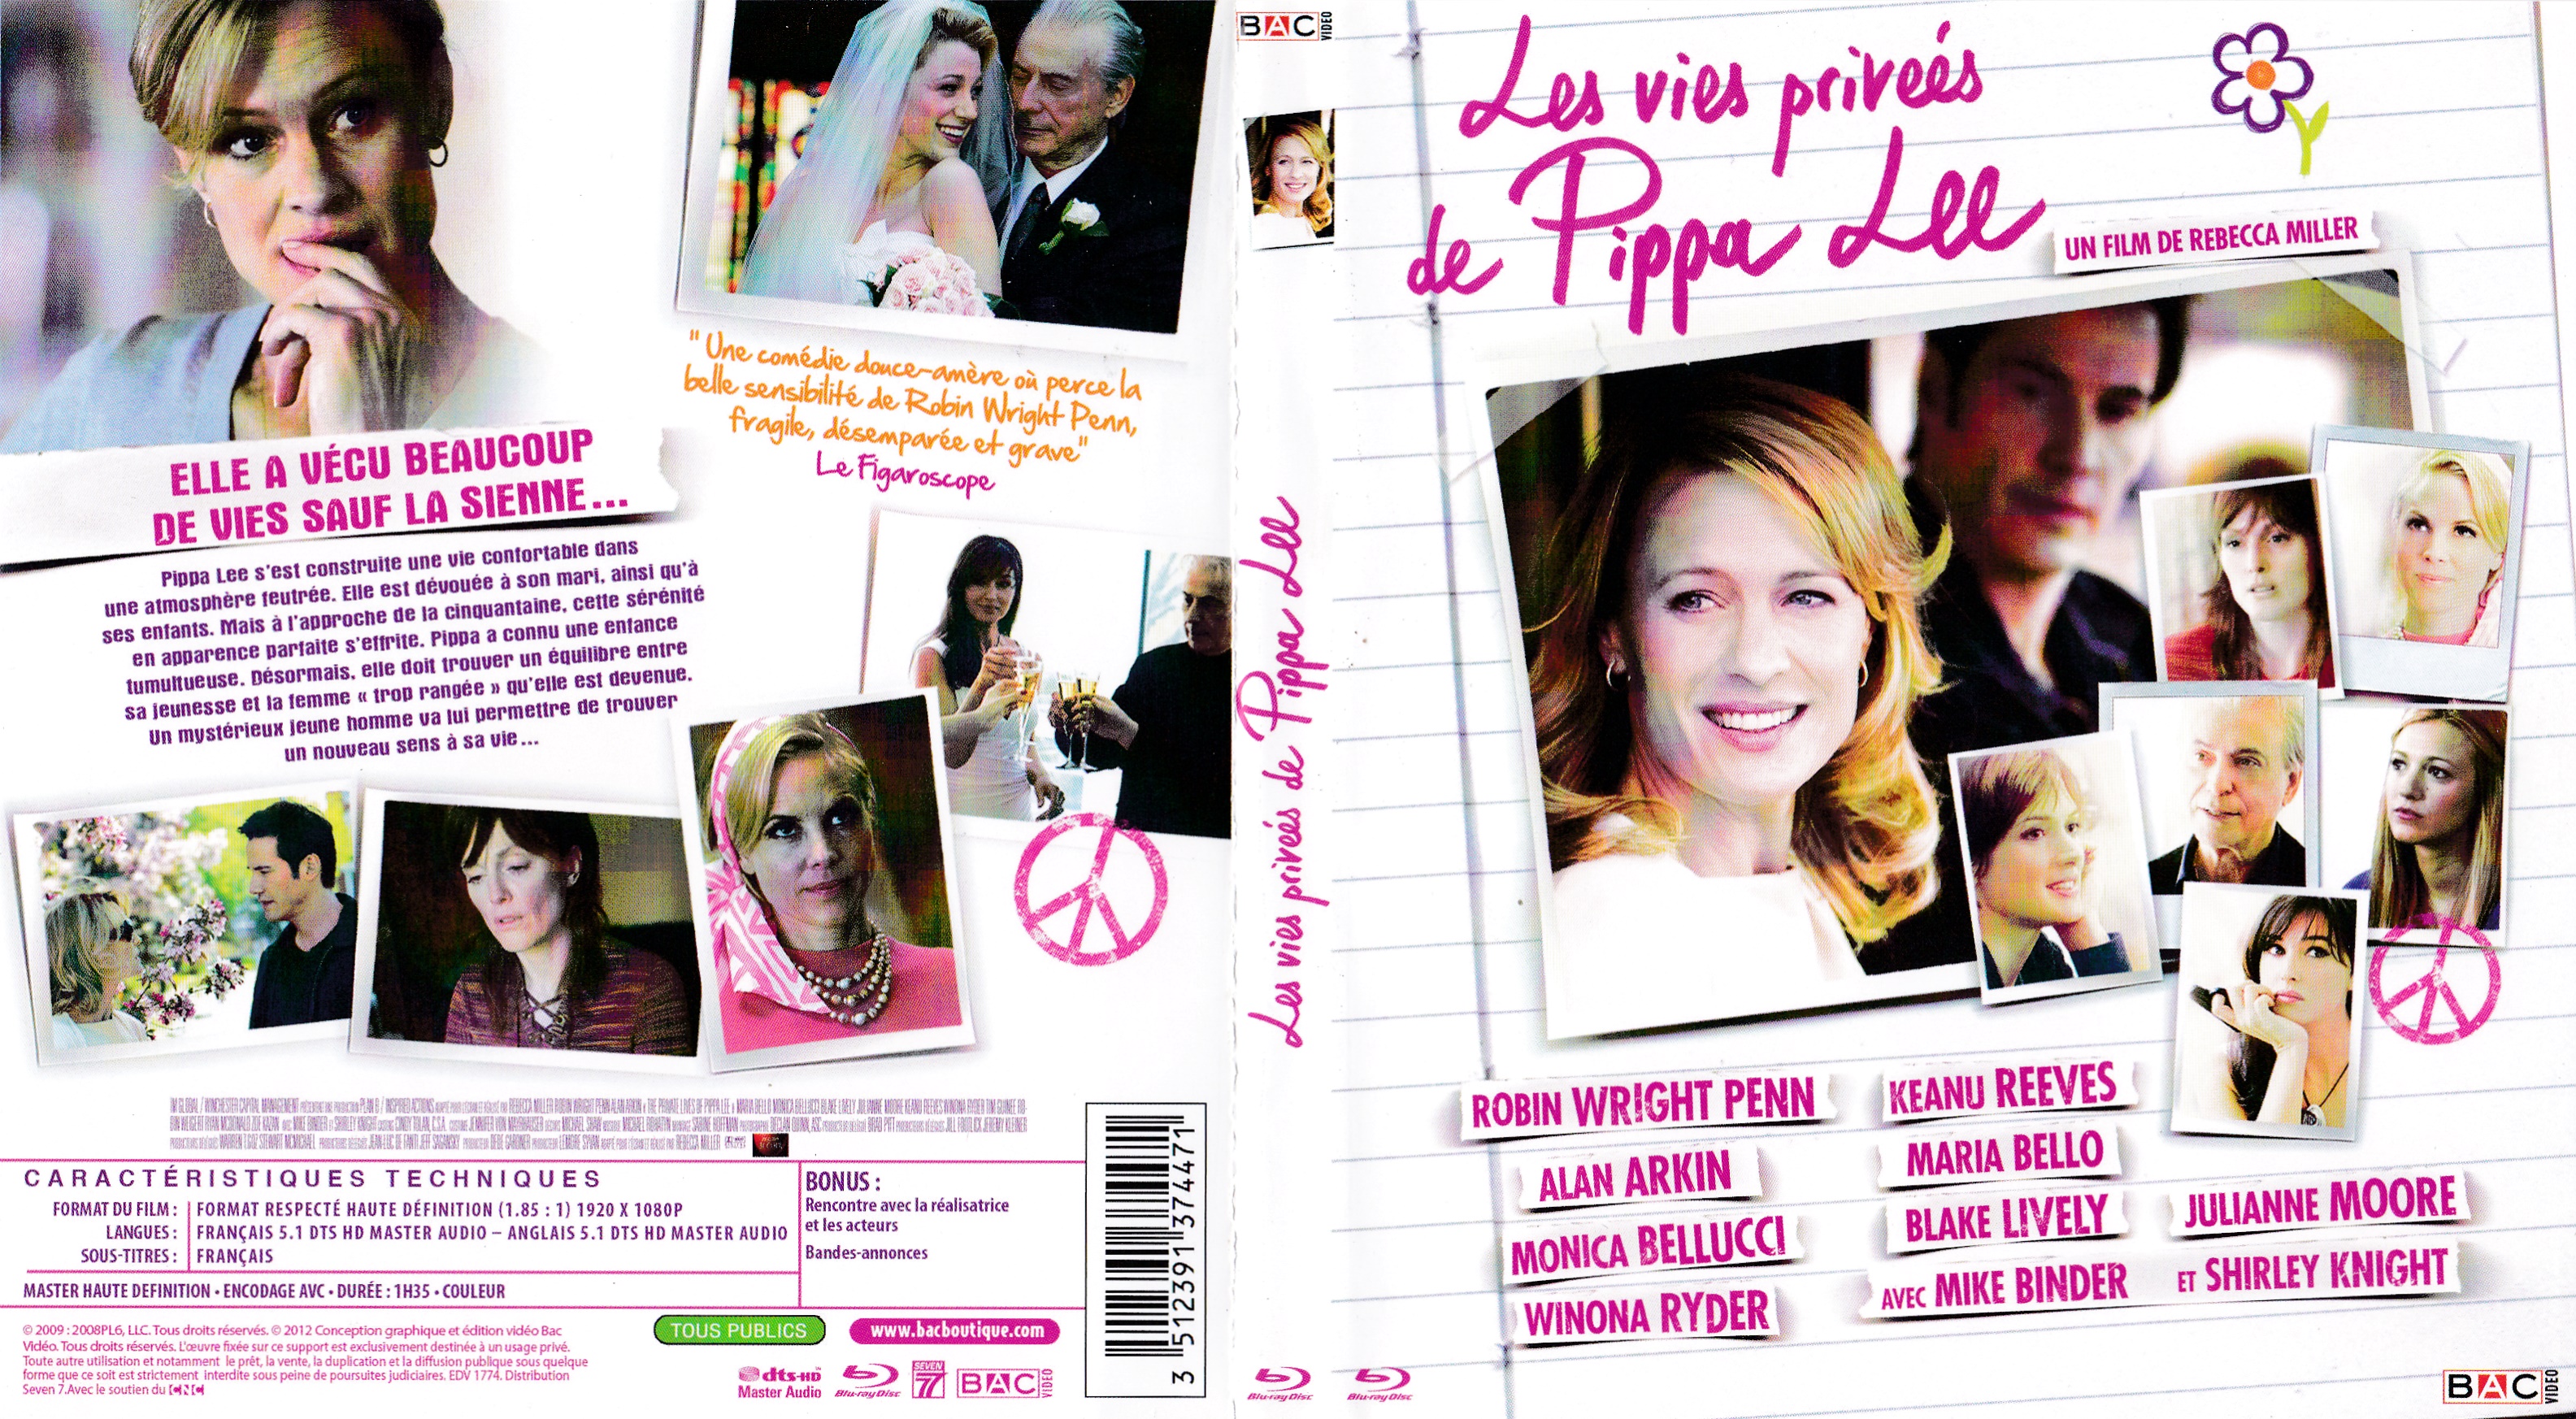 Jaquette DVD Les vies privees de Pippa Lee (BLU-RAY)